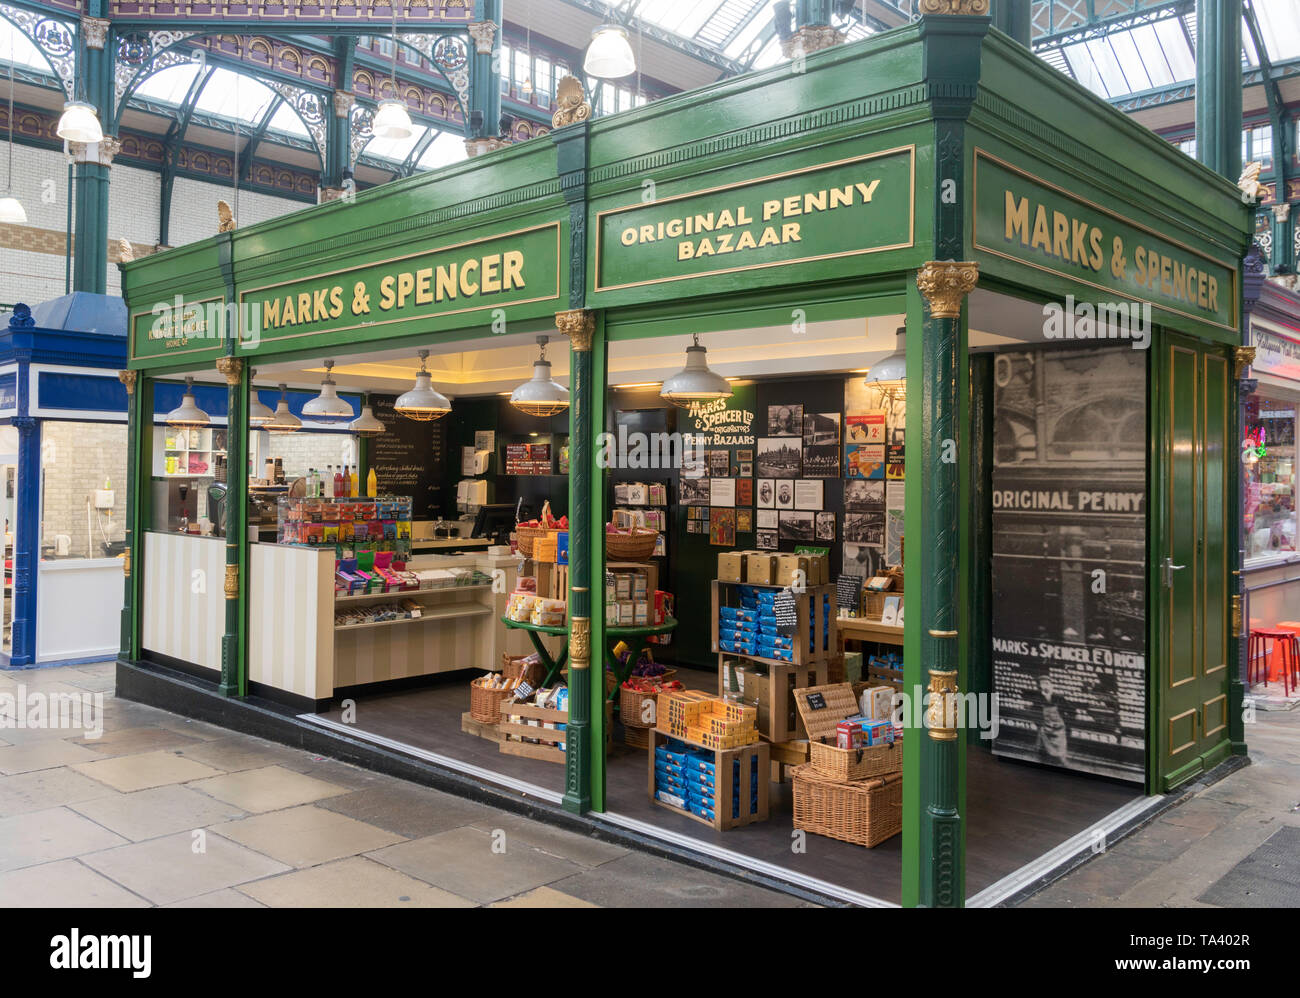 Marks and Spencer's original penny bazaar in Leeds Kirkgate market, Yorkshire, England, UK Stock Photo